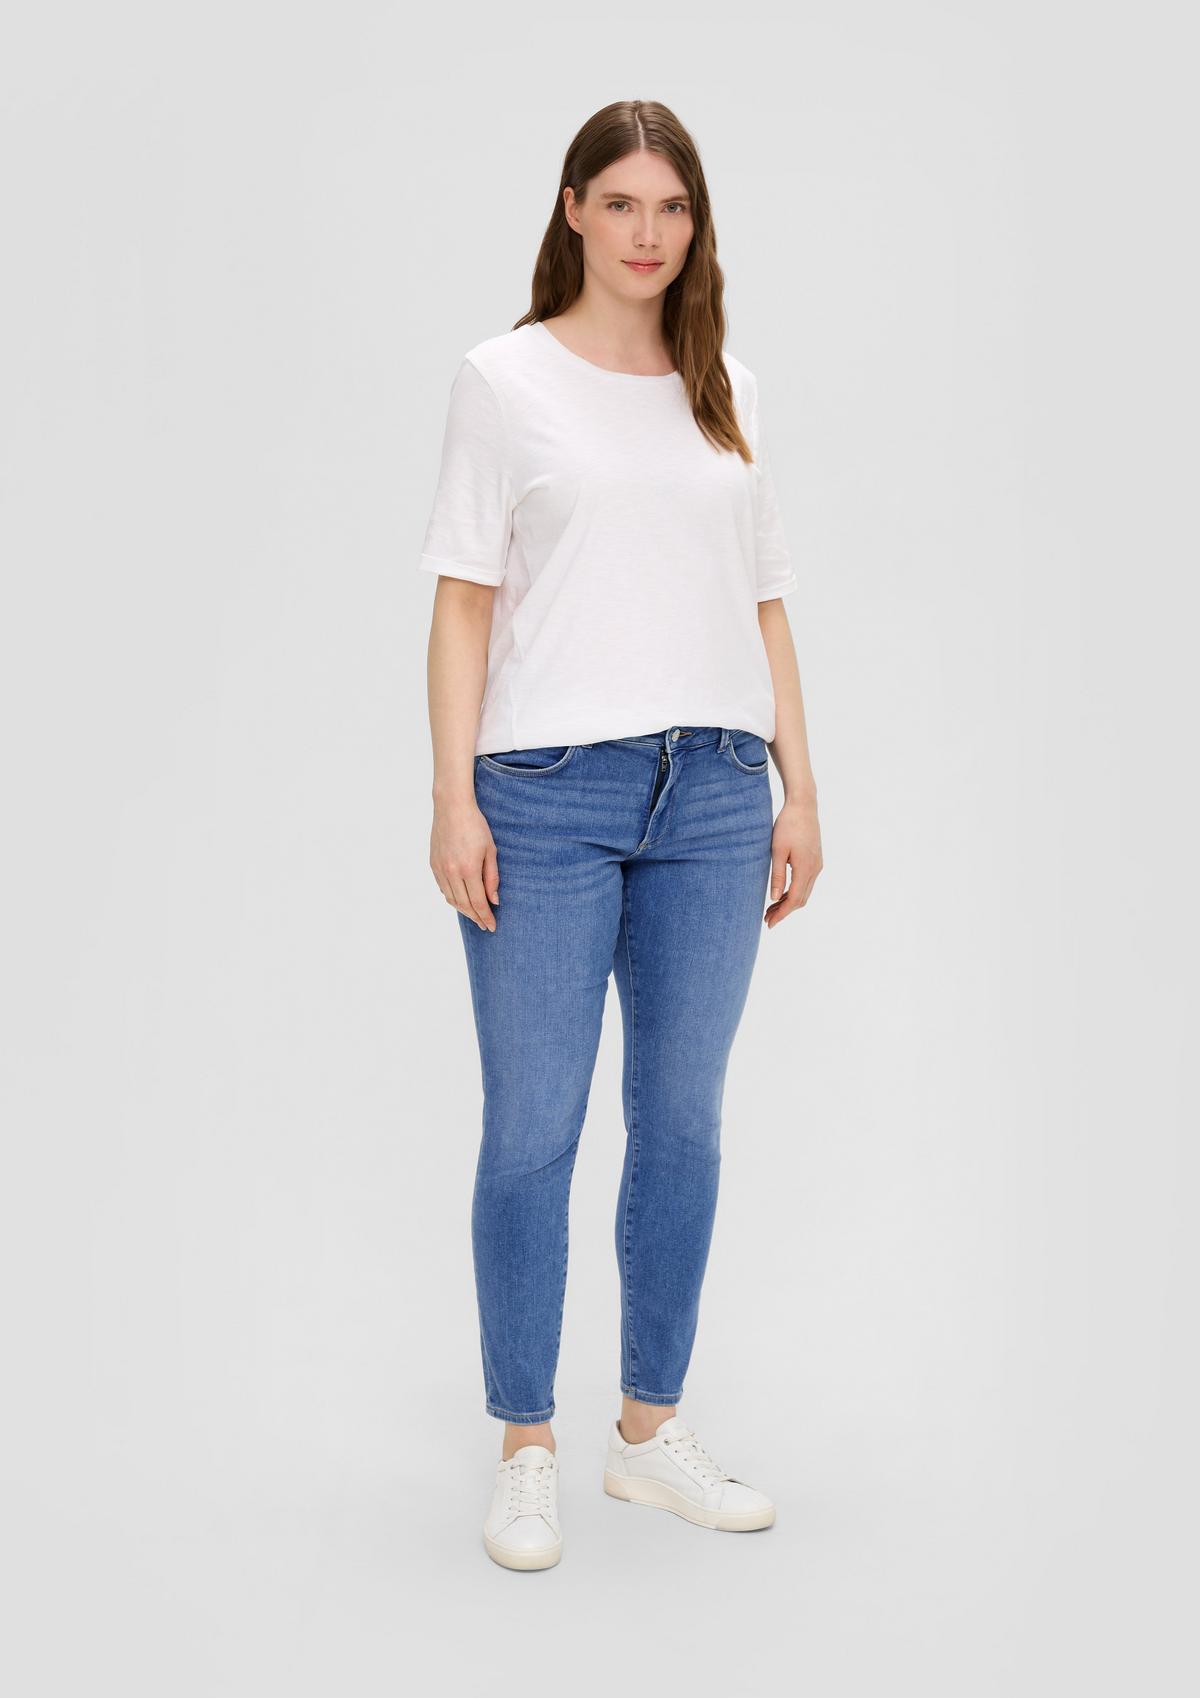 Anny jeans / mid rise / skinny leg